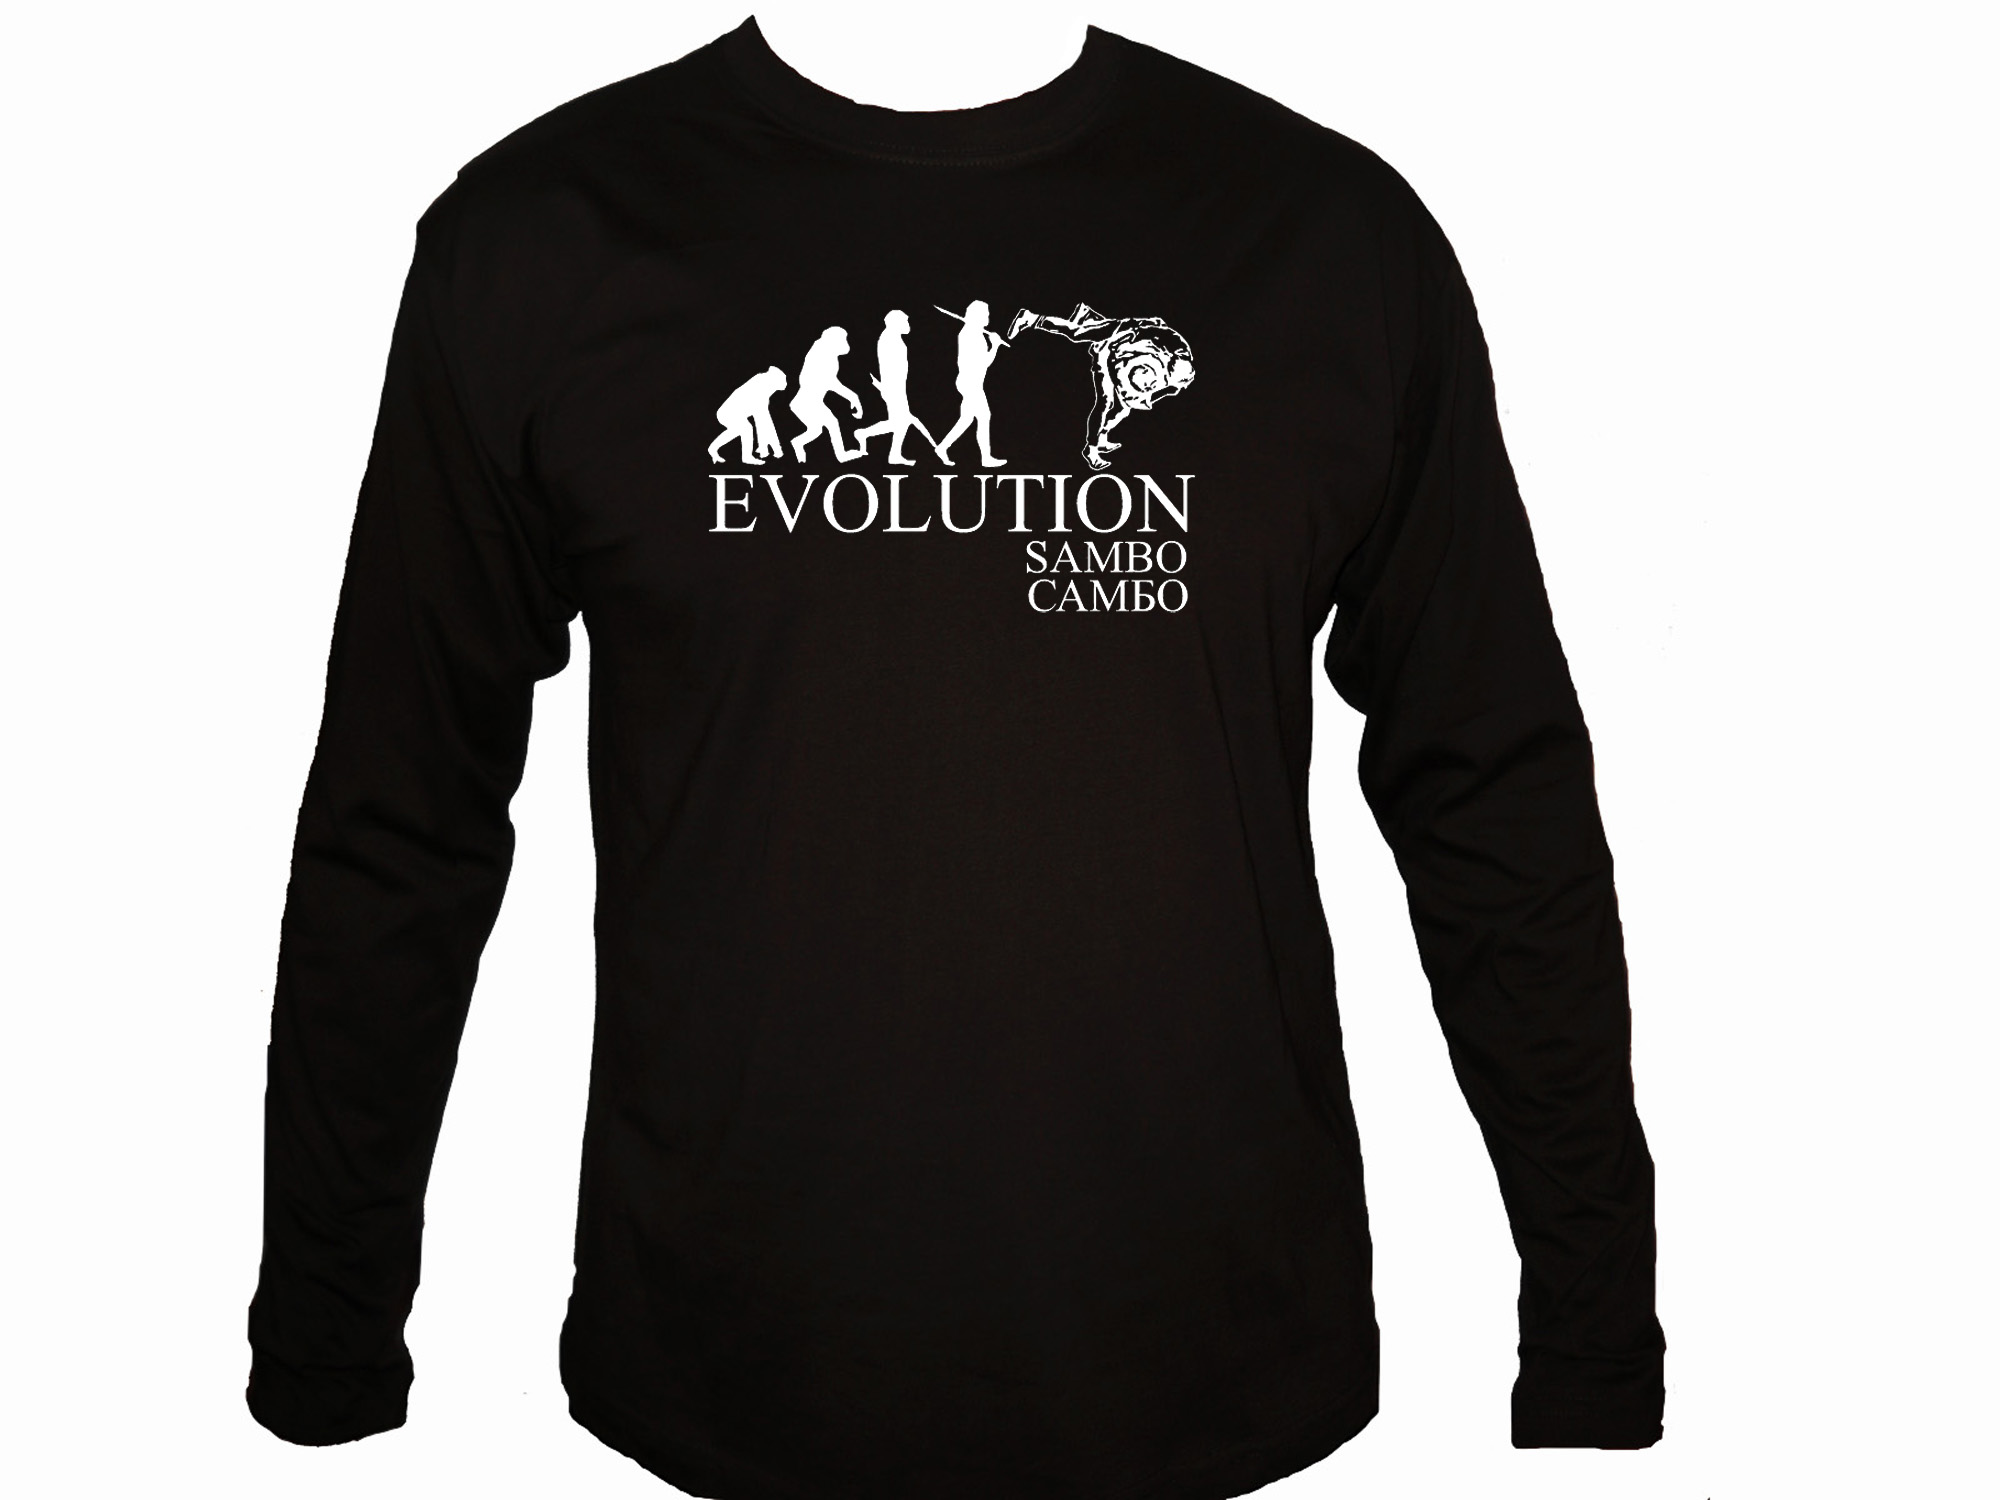 Sambo evolution Russian martial arts sleeved t-shirt